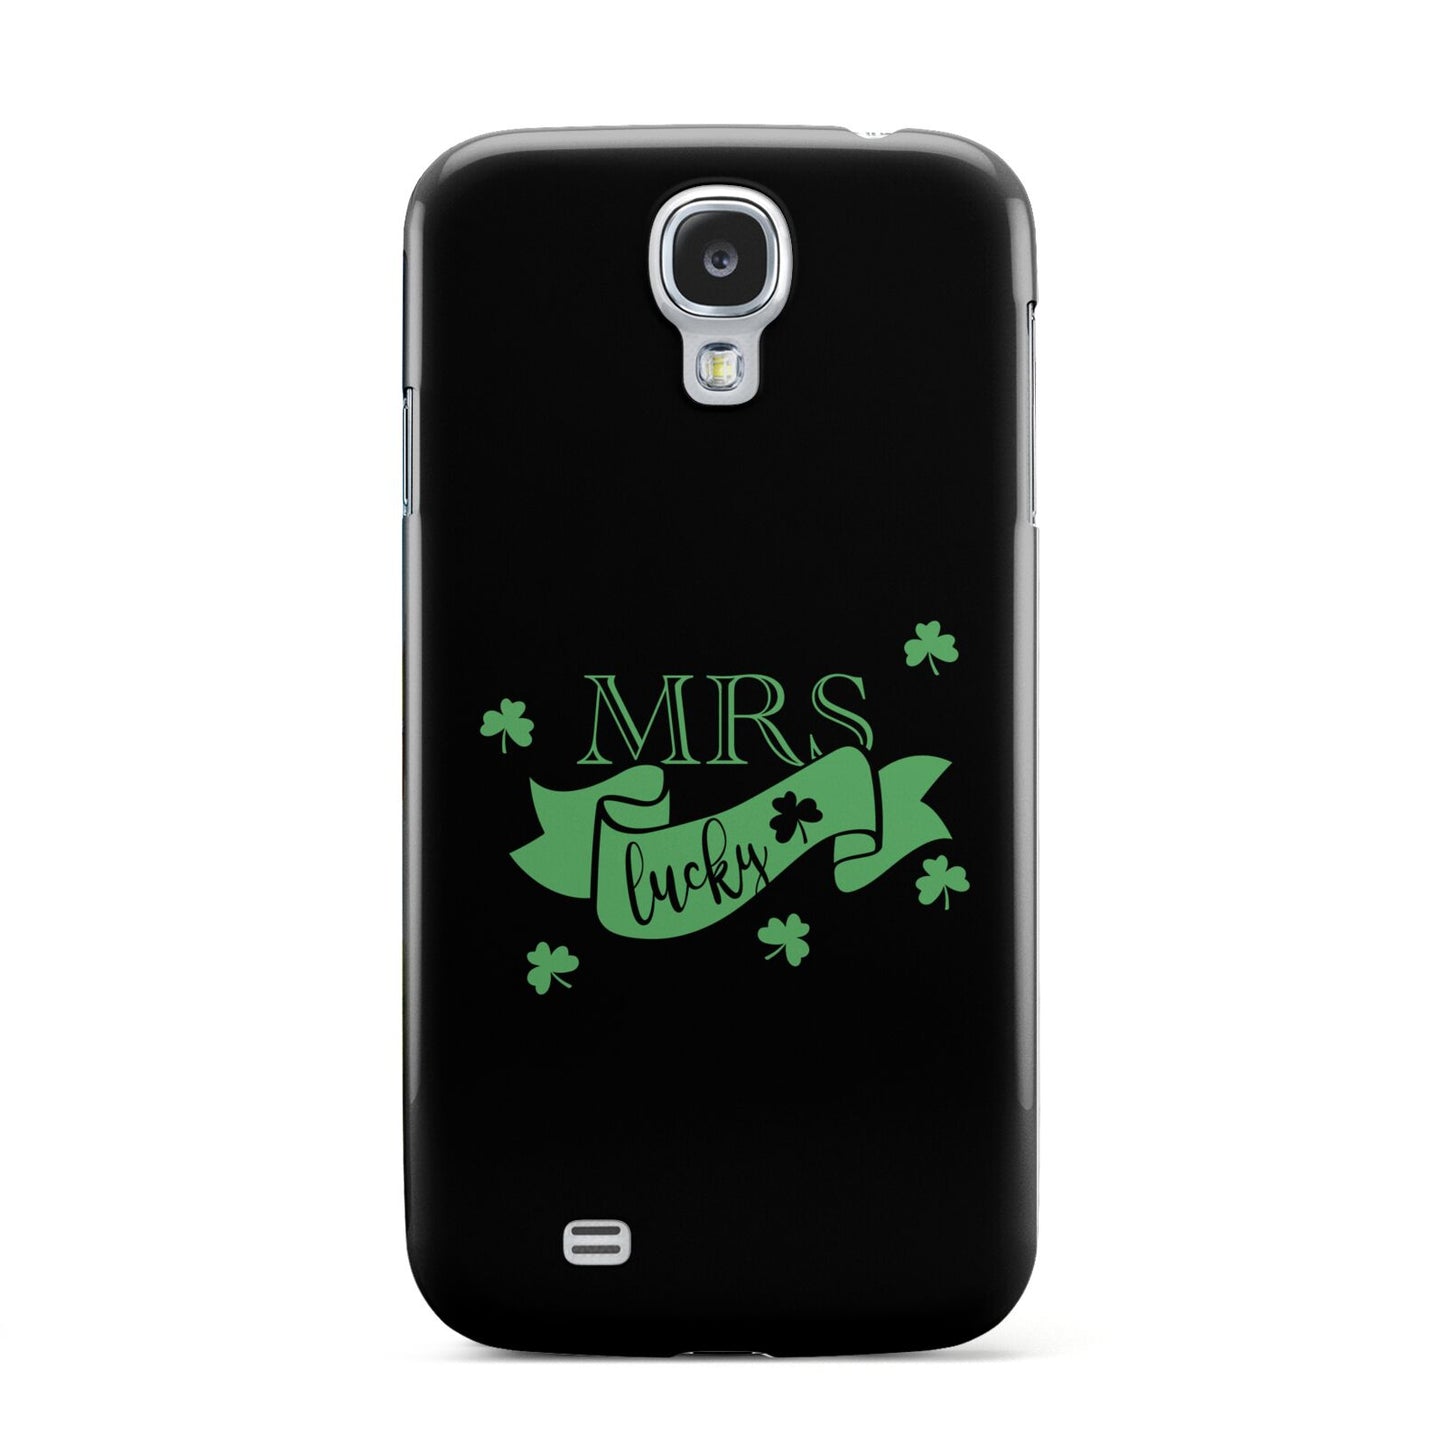 Mrs Lucky Samsung Galaxy S4 Case